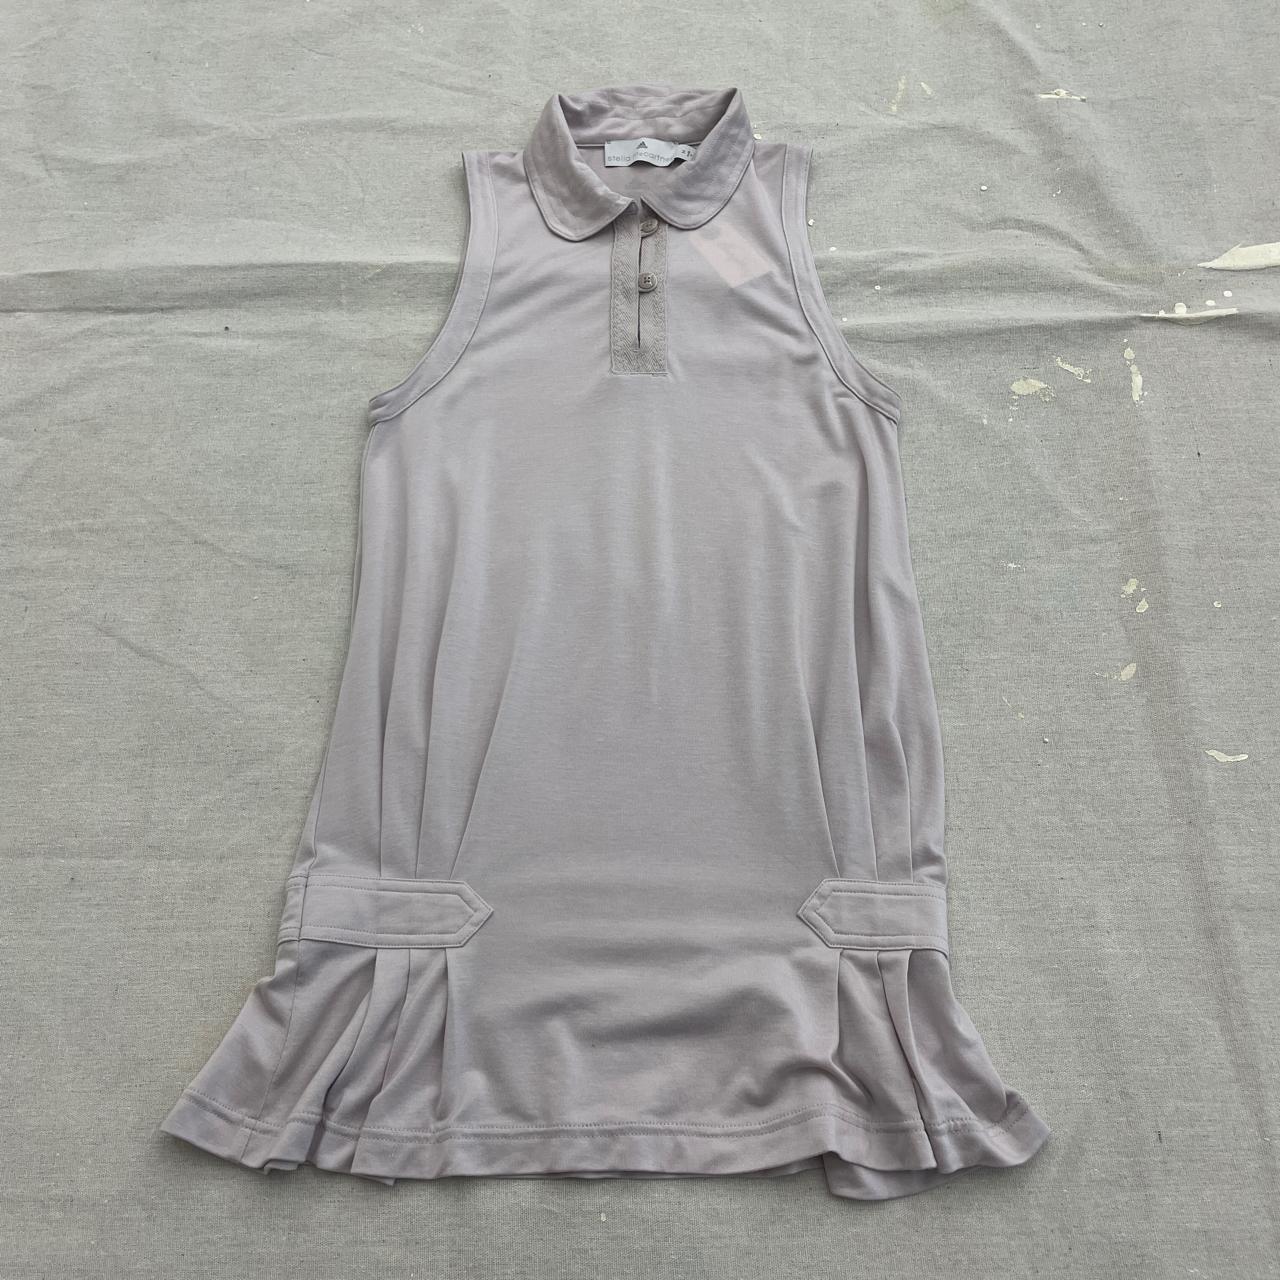 Stella McCartney Women's Grey and Purple Dress